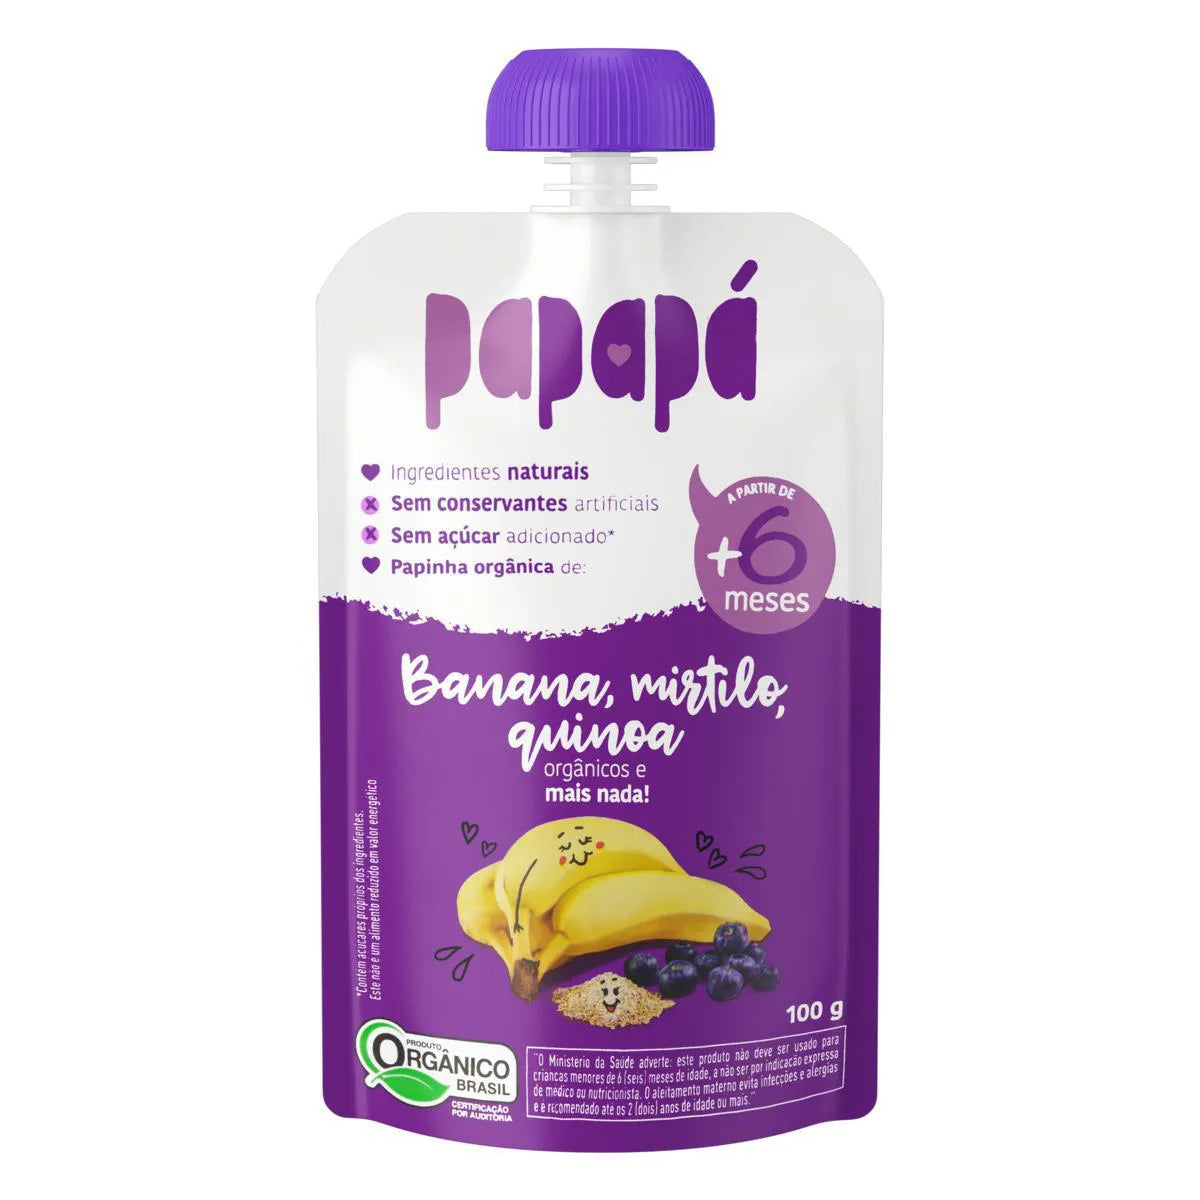 PAPAPA - Organic baby food | Banana, blueberry & quinoa - 100g - FINAL SALE - EXPIRED or CLOSE TO EXPIRY